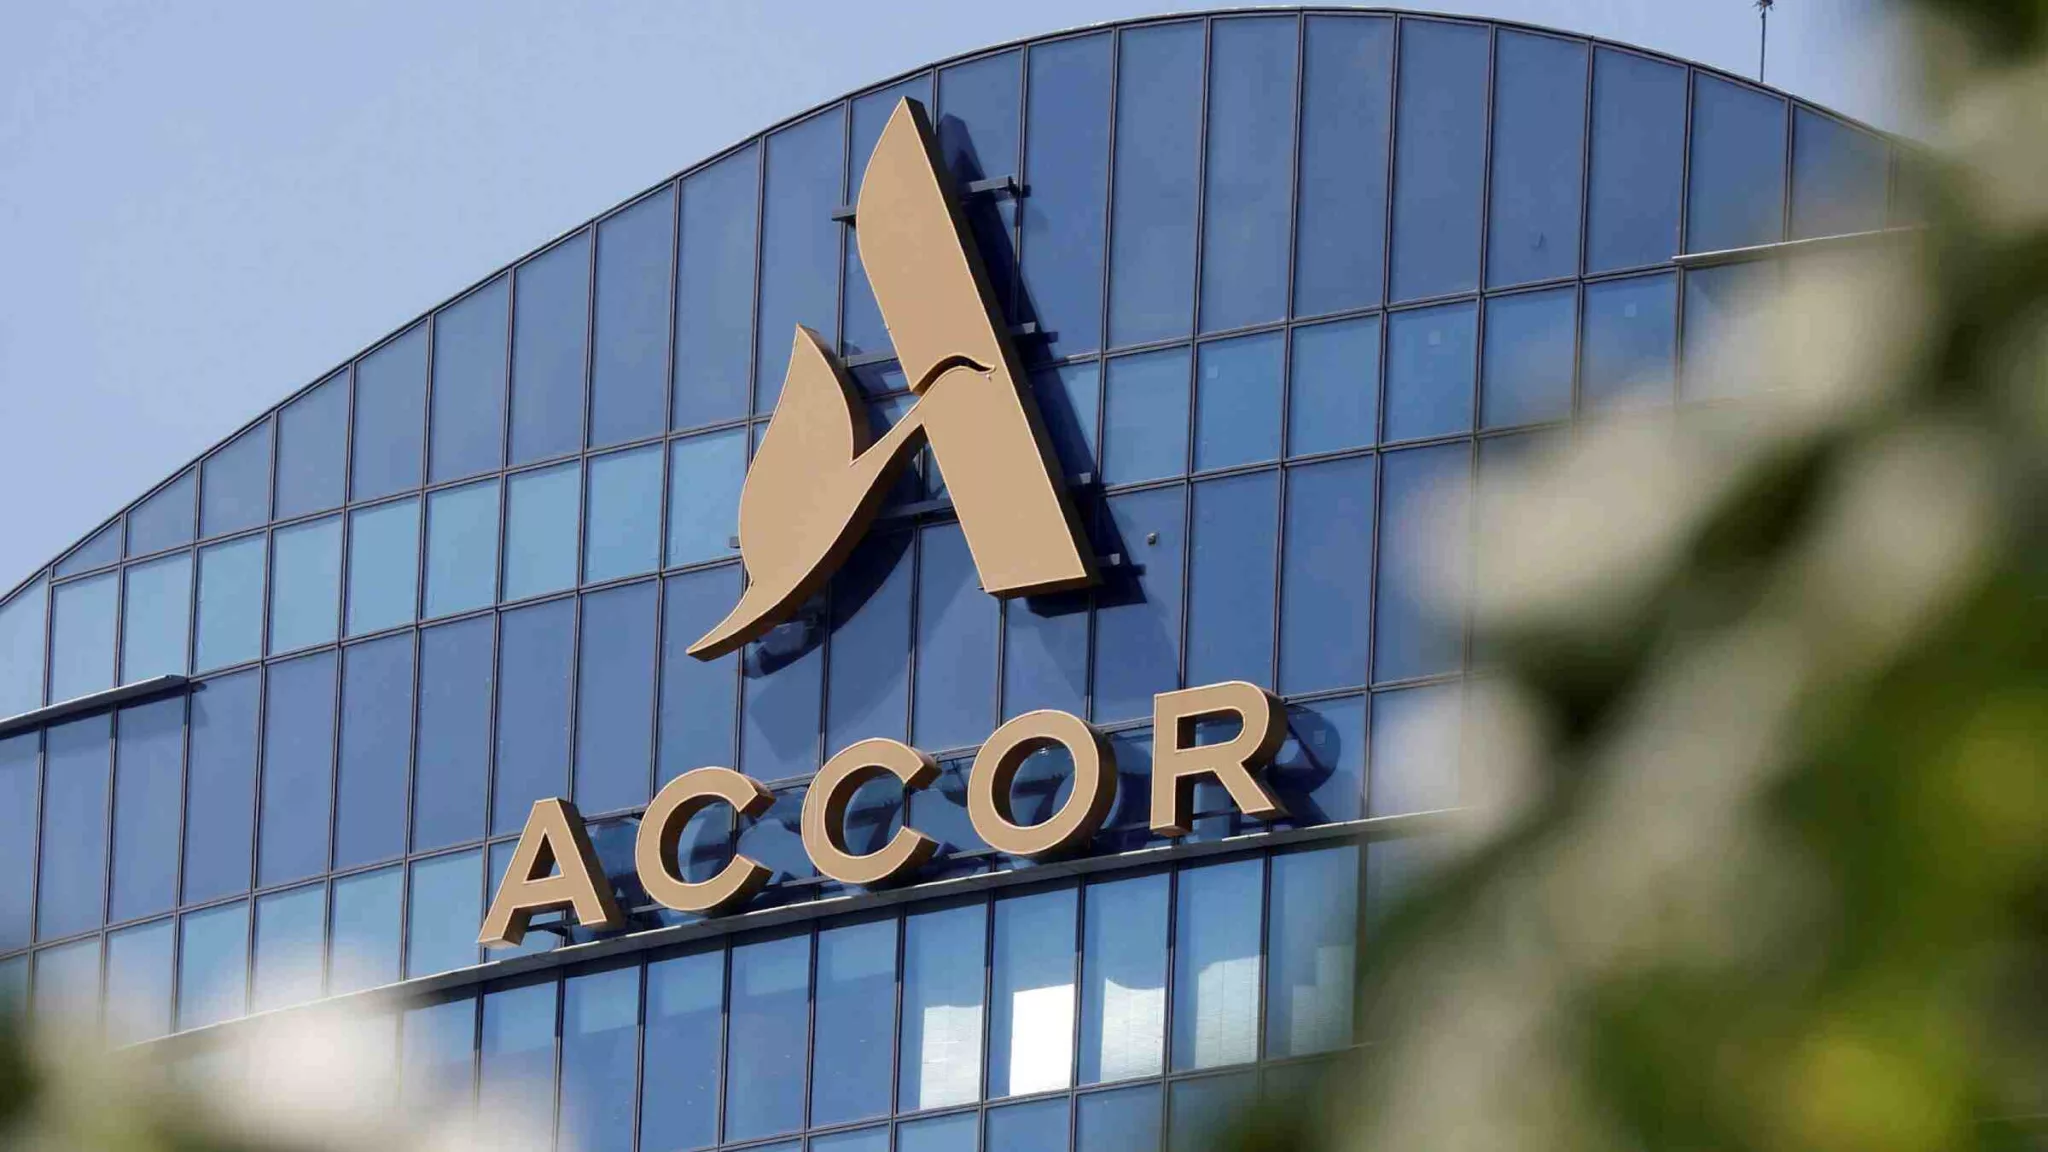 Accor’s Ambitious Growth Plans in Premium Hotel Portfolio across North Africa